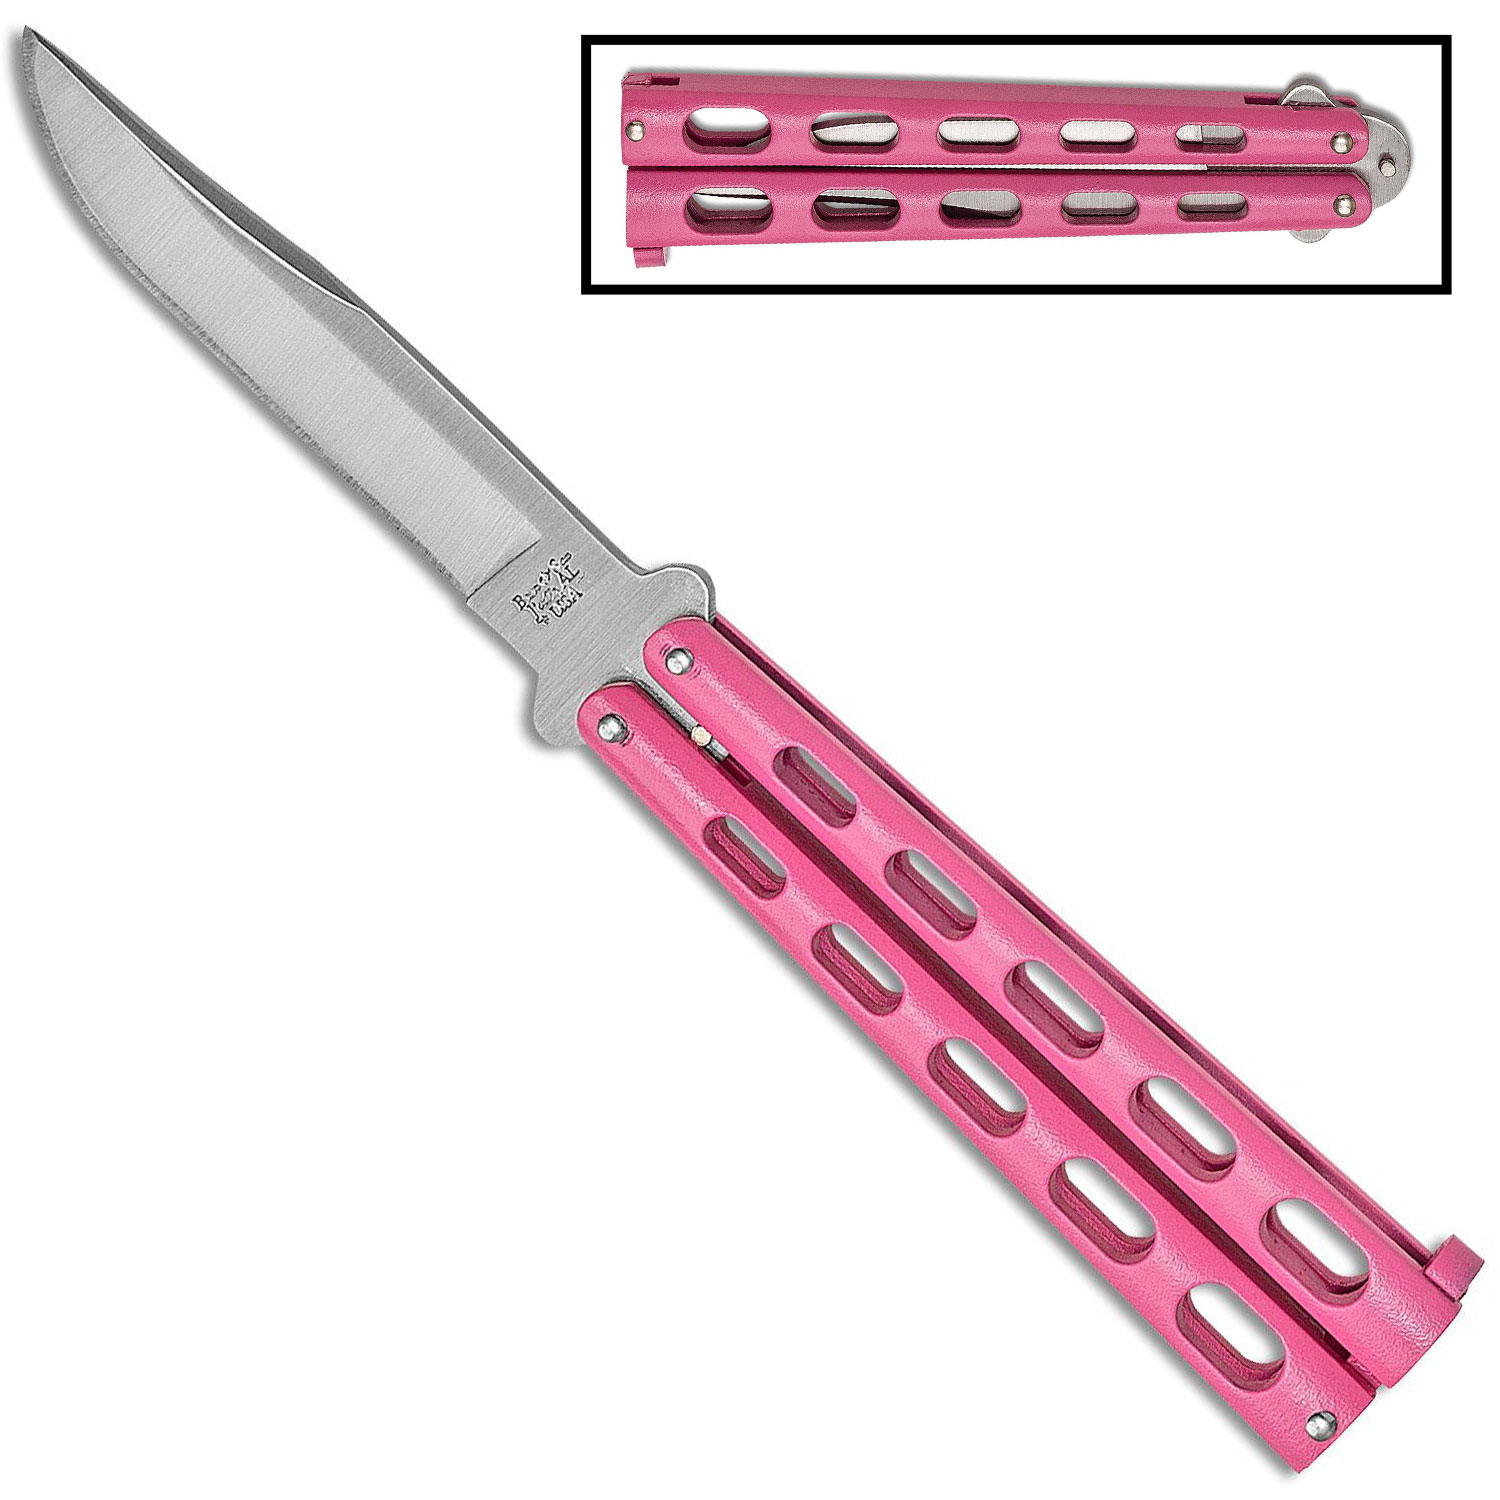 Bear and Son 114PK Butterfly Knife Pink Zinc Handles